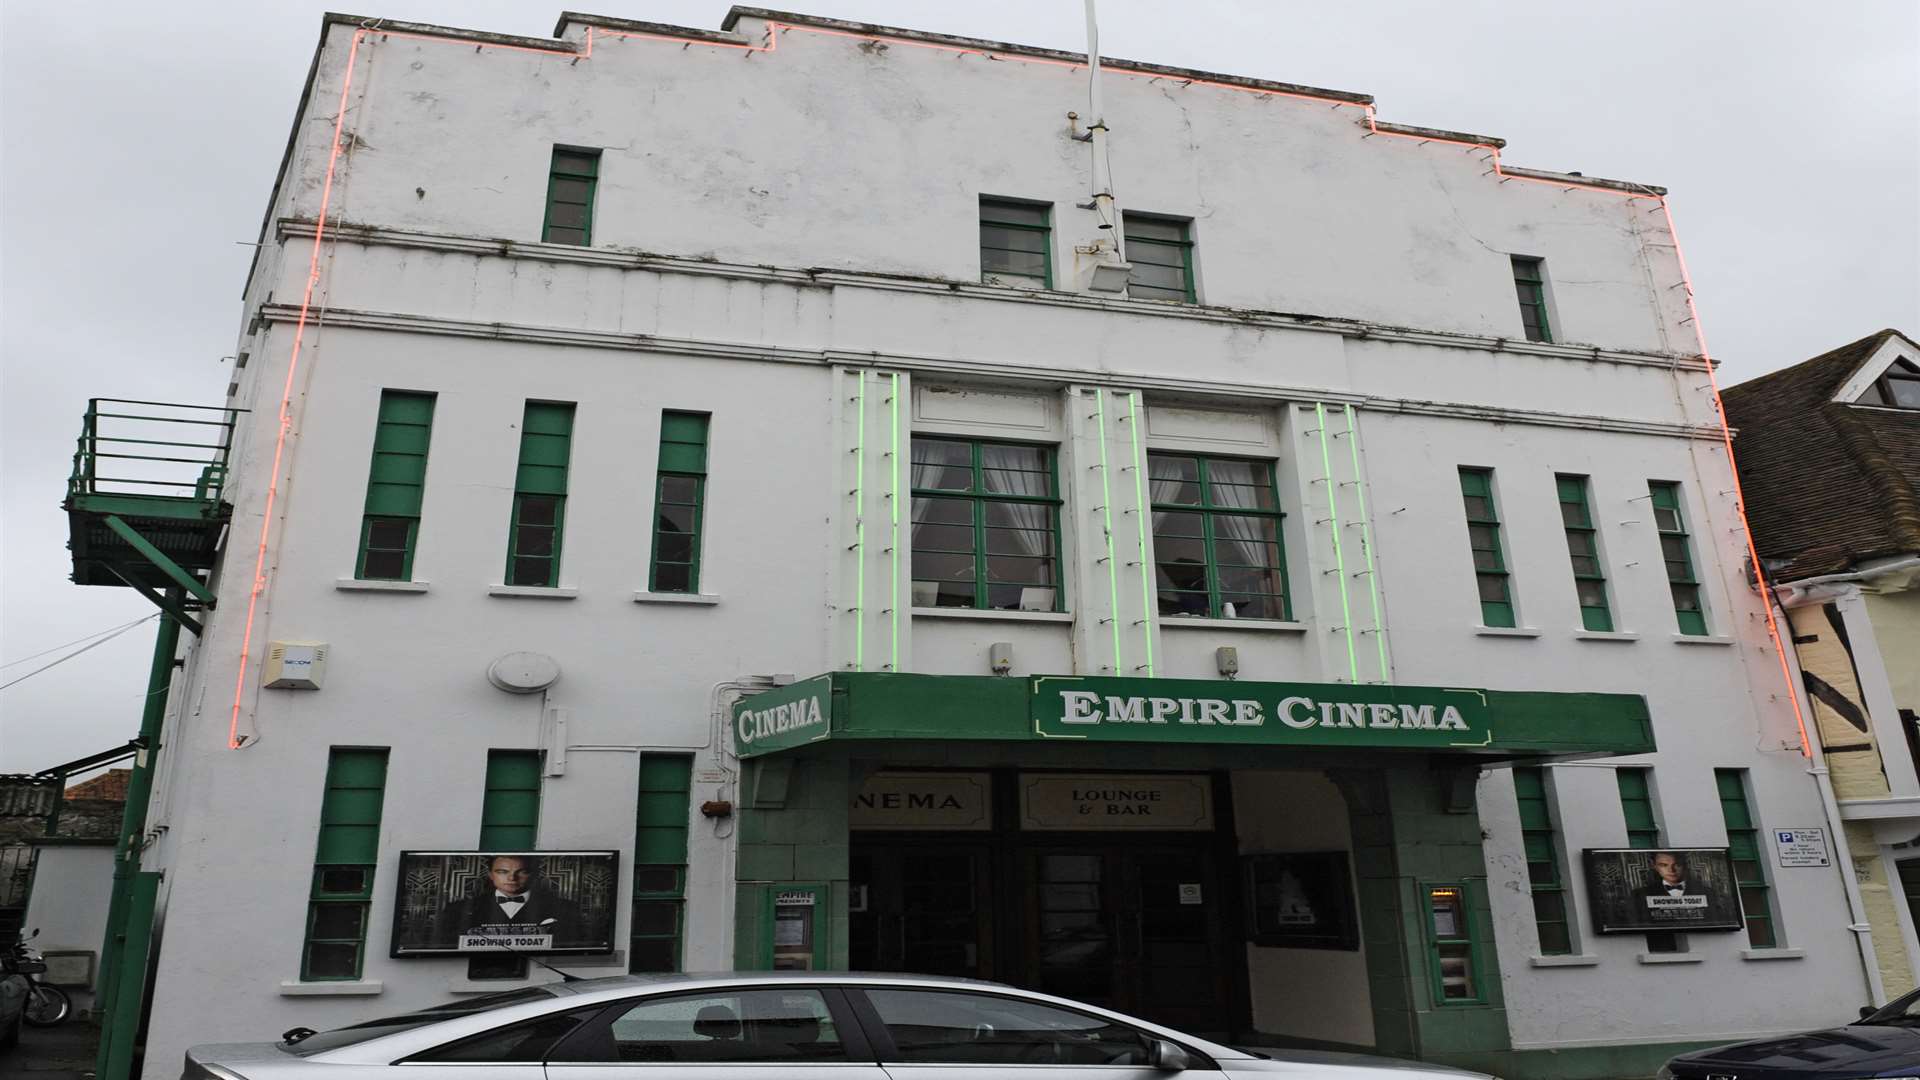 Empire cinema, Sandwich